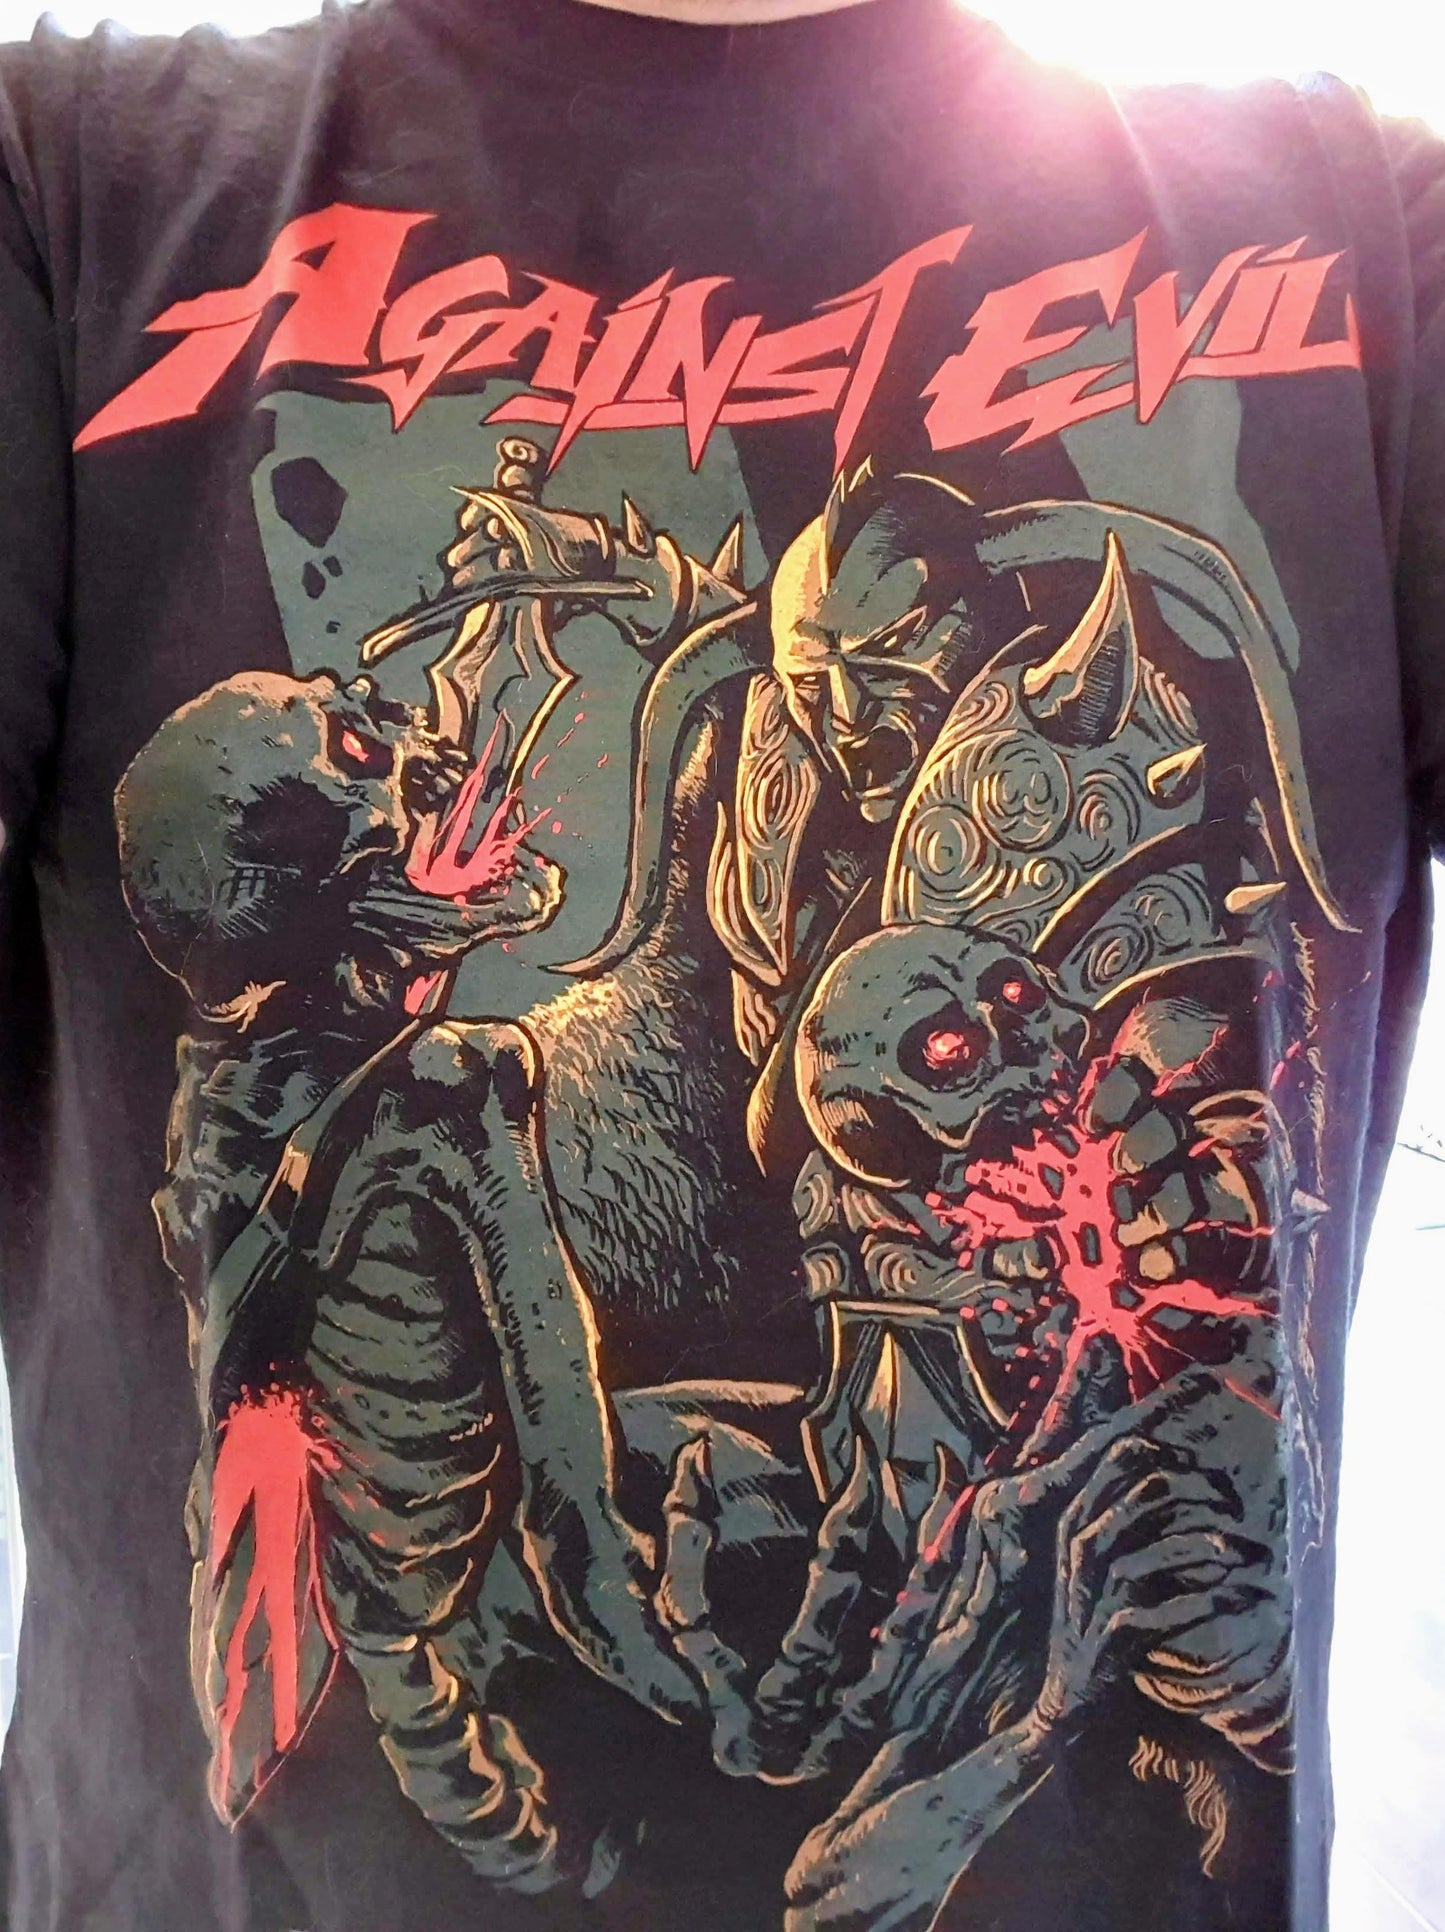 Against Evil - Sentenced to Death (Shirt)